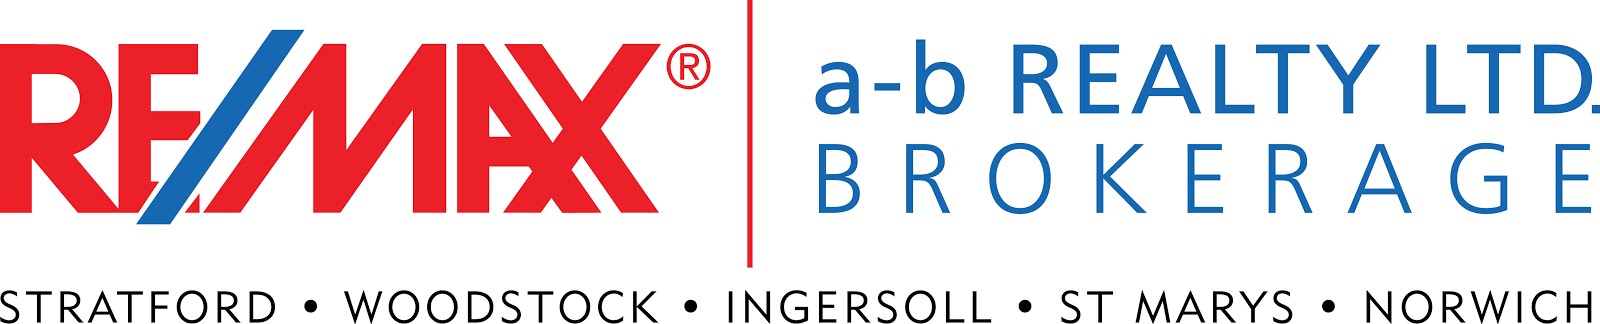 RE/MAX a-b Realty Ltd., Brokerage